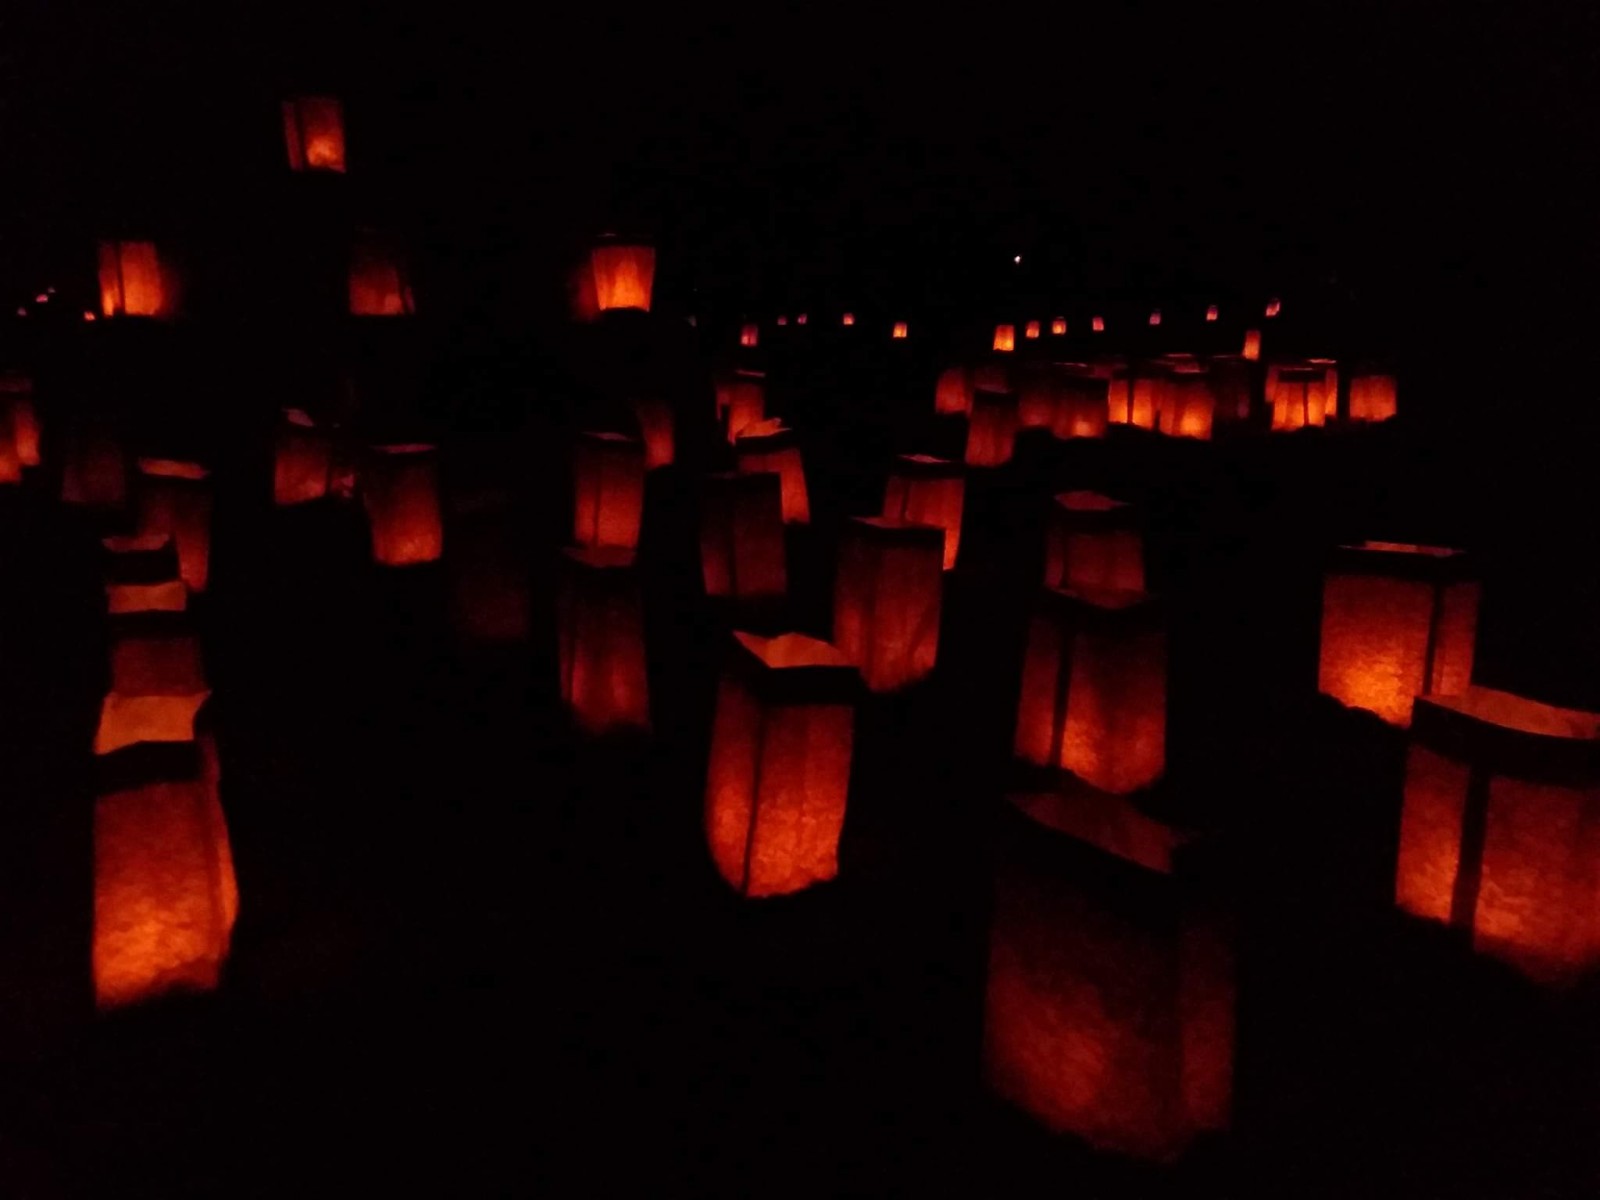 Luminarias are featured every December at Fort Selden Historic Site's annual Las Noches de Las Luminarias.